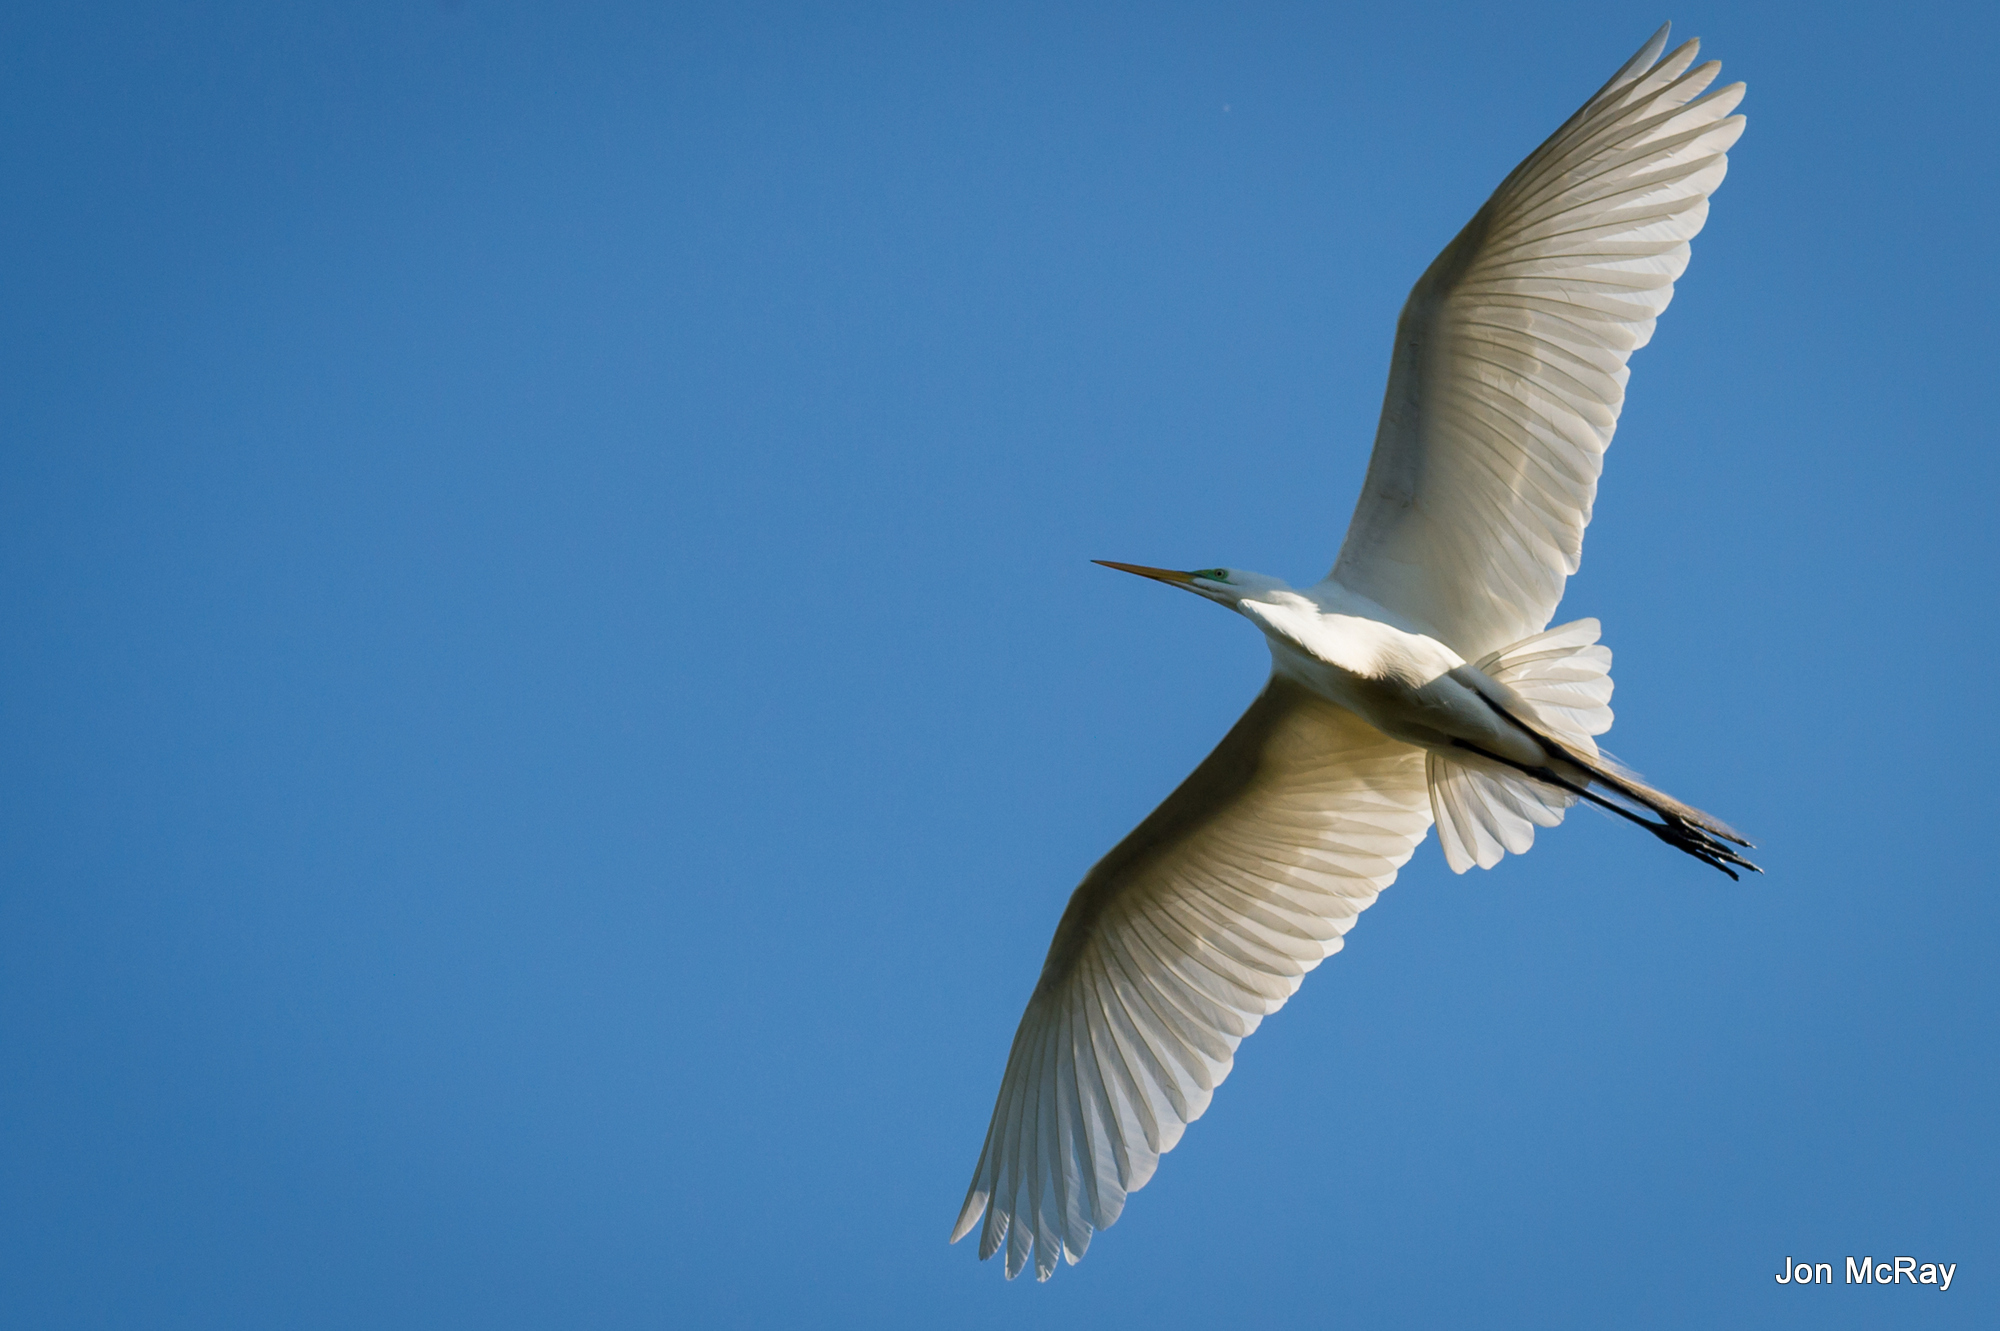 That Bird Got My Wings – Mindfulness & Heartfulness